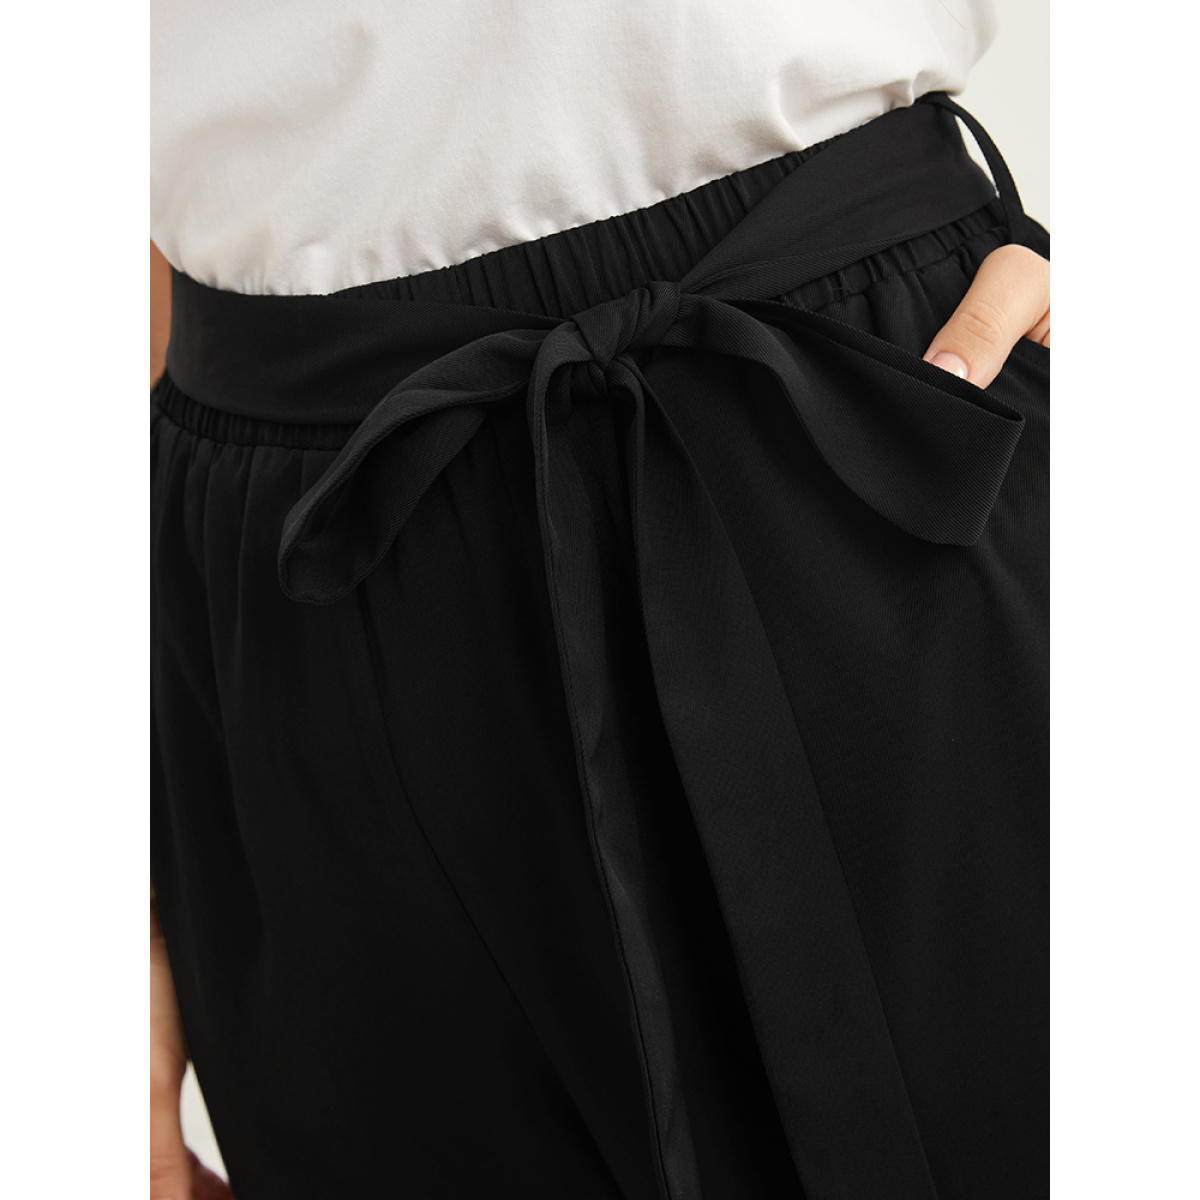 

Plus Size Plain Elastic Waist Belted Pocket Mid Rise Pants Women Black Office Mid Rise Dailywear Pants BloomChic